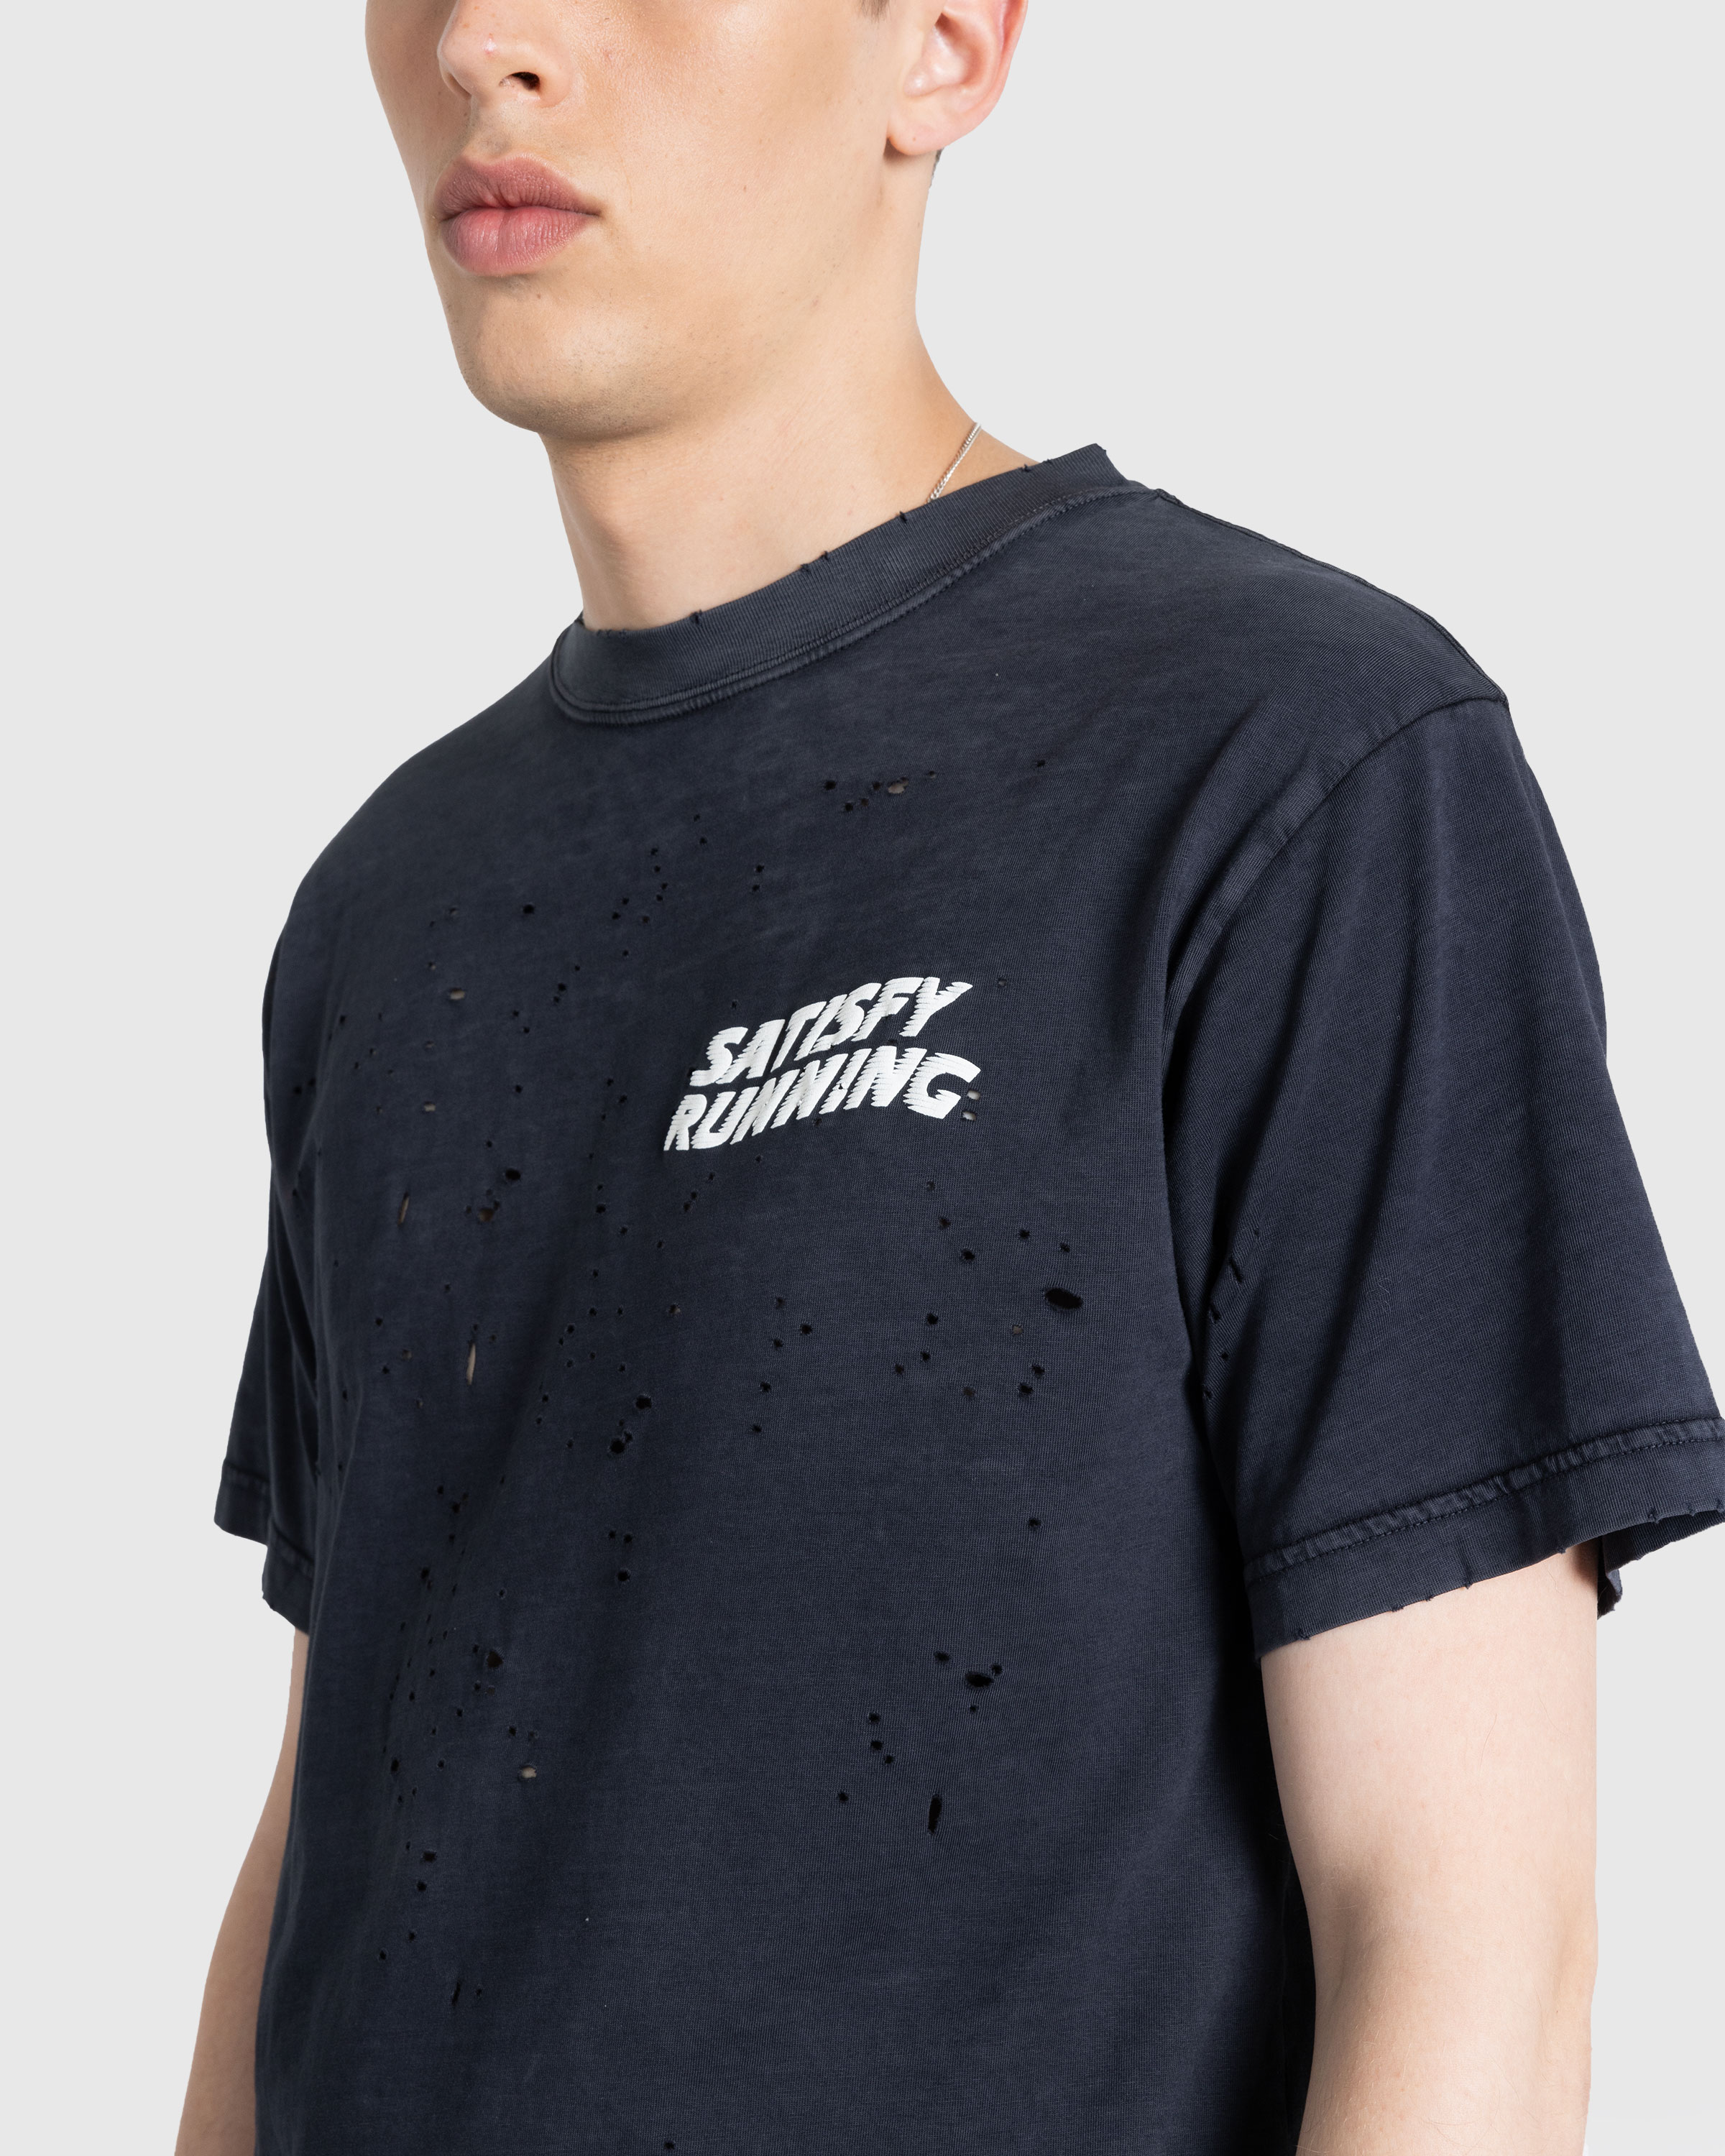 Satisfy – MothTech T-Shirt Stone Black - T-Shirts - Grey - Image 5